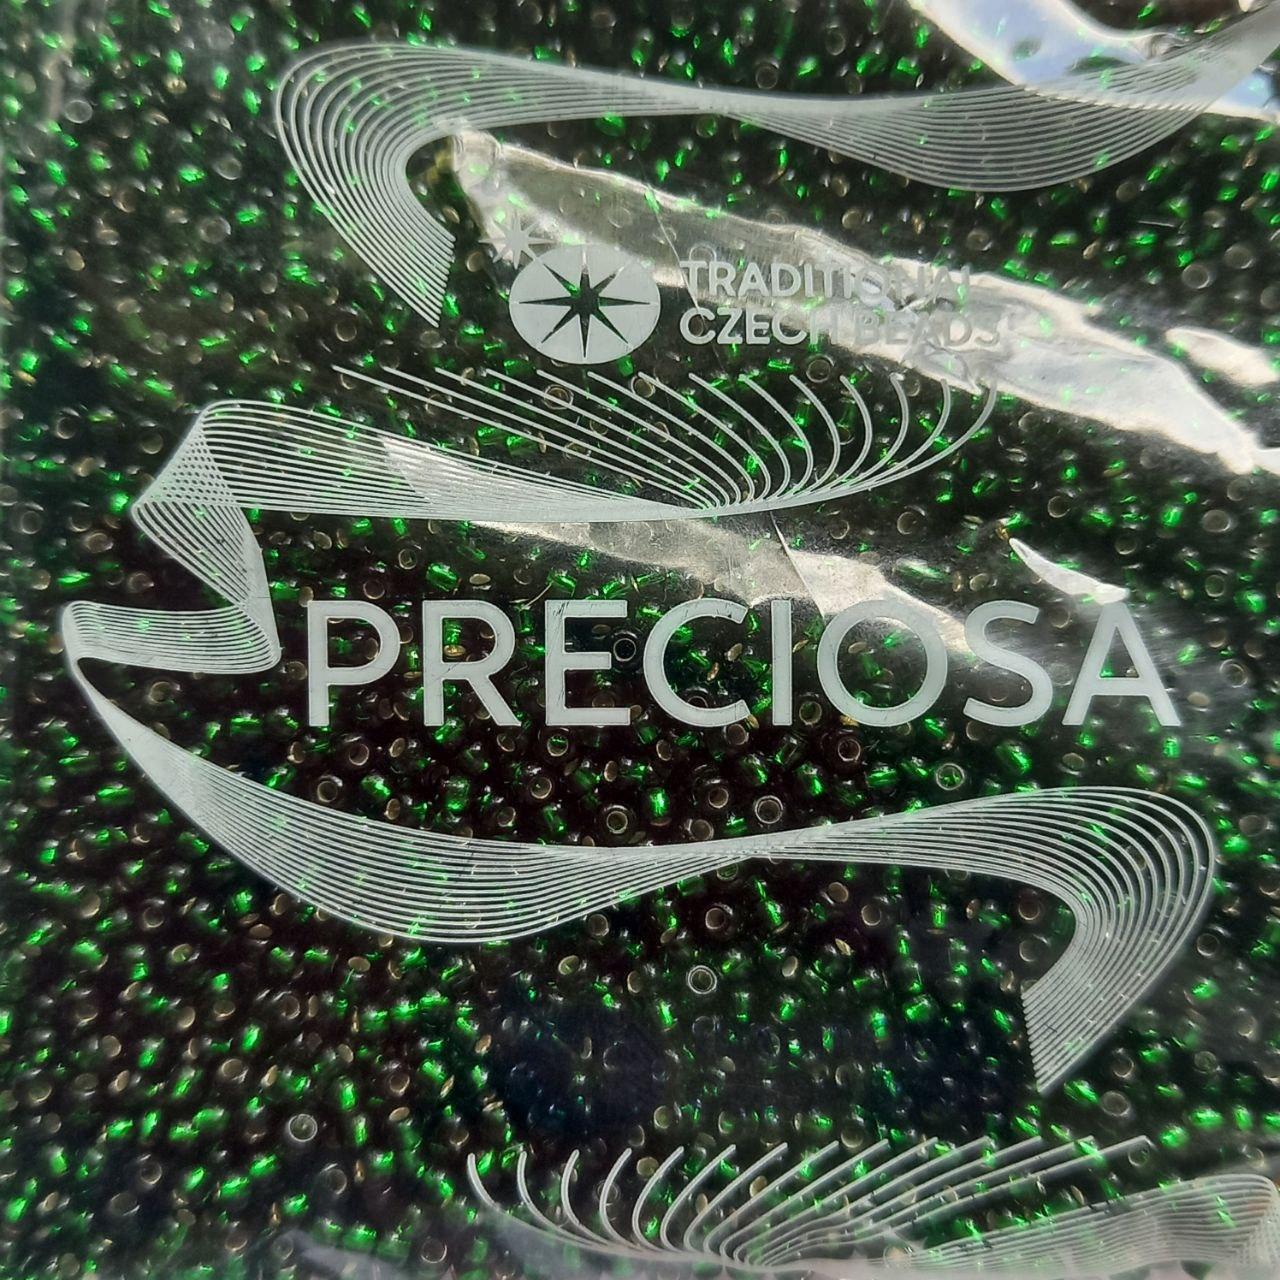 Бісер чеський Preciosa блискучий зелений 50г 10/0 57060